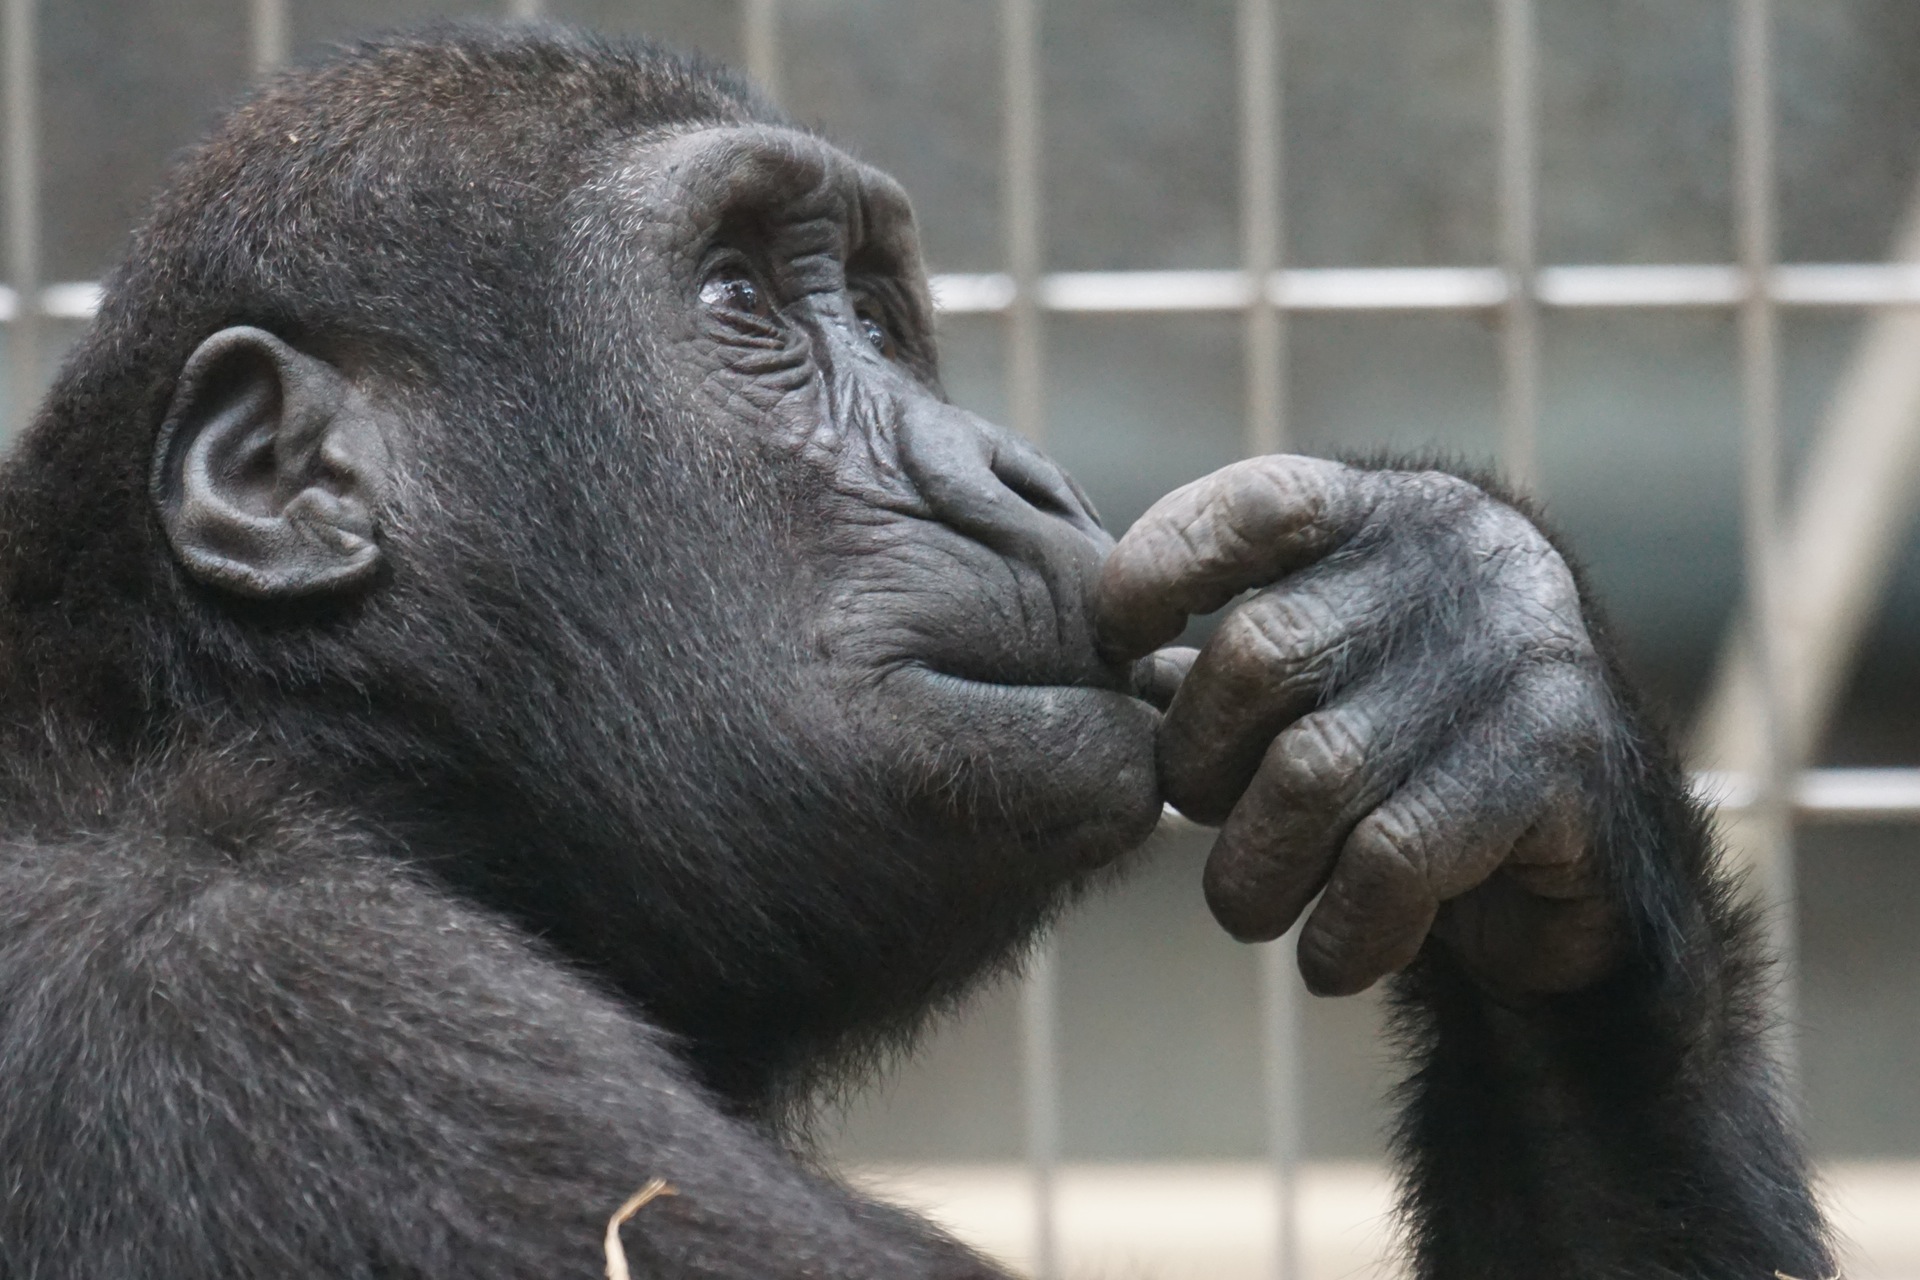 Twój smartfon trenerem pamięci i refleksu? pamięć primate ape thinking mimic